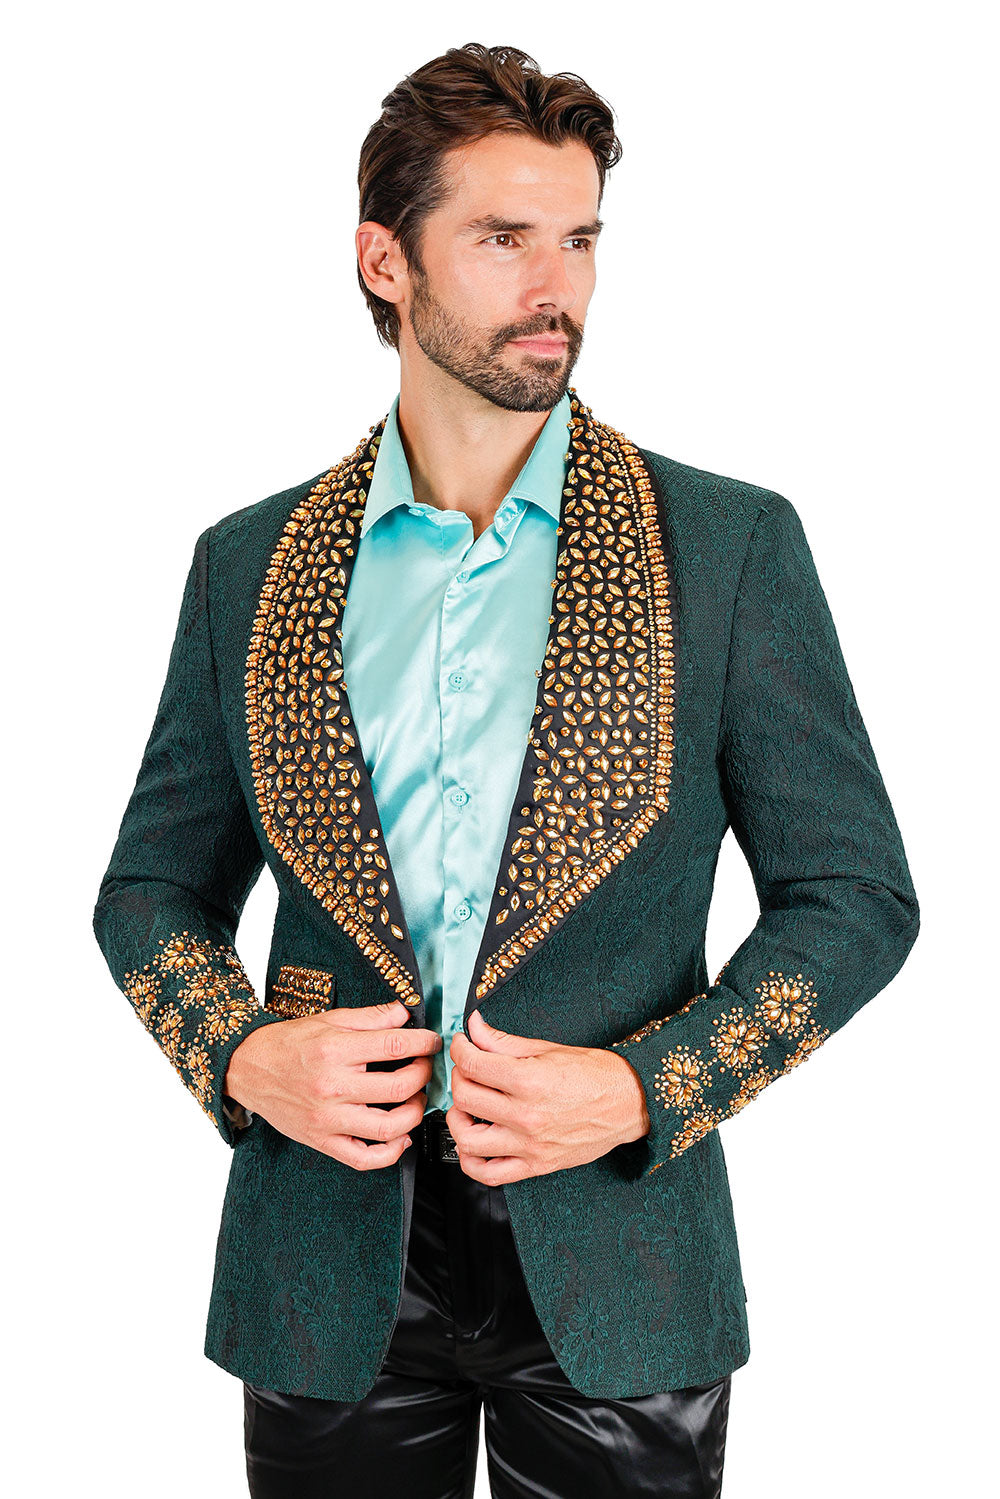 Barabas Elite Men's Rhinestone Luxury Shawl Collar Blazer 3EBL14 Green Gold